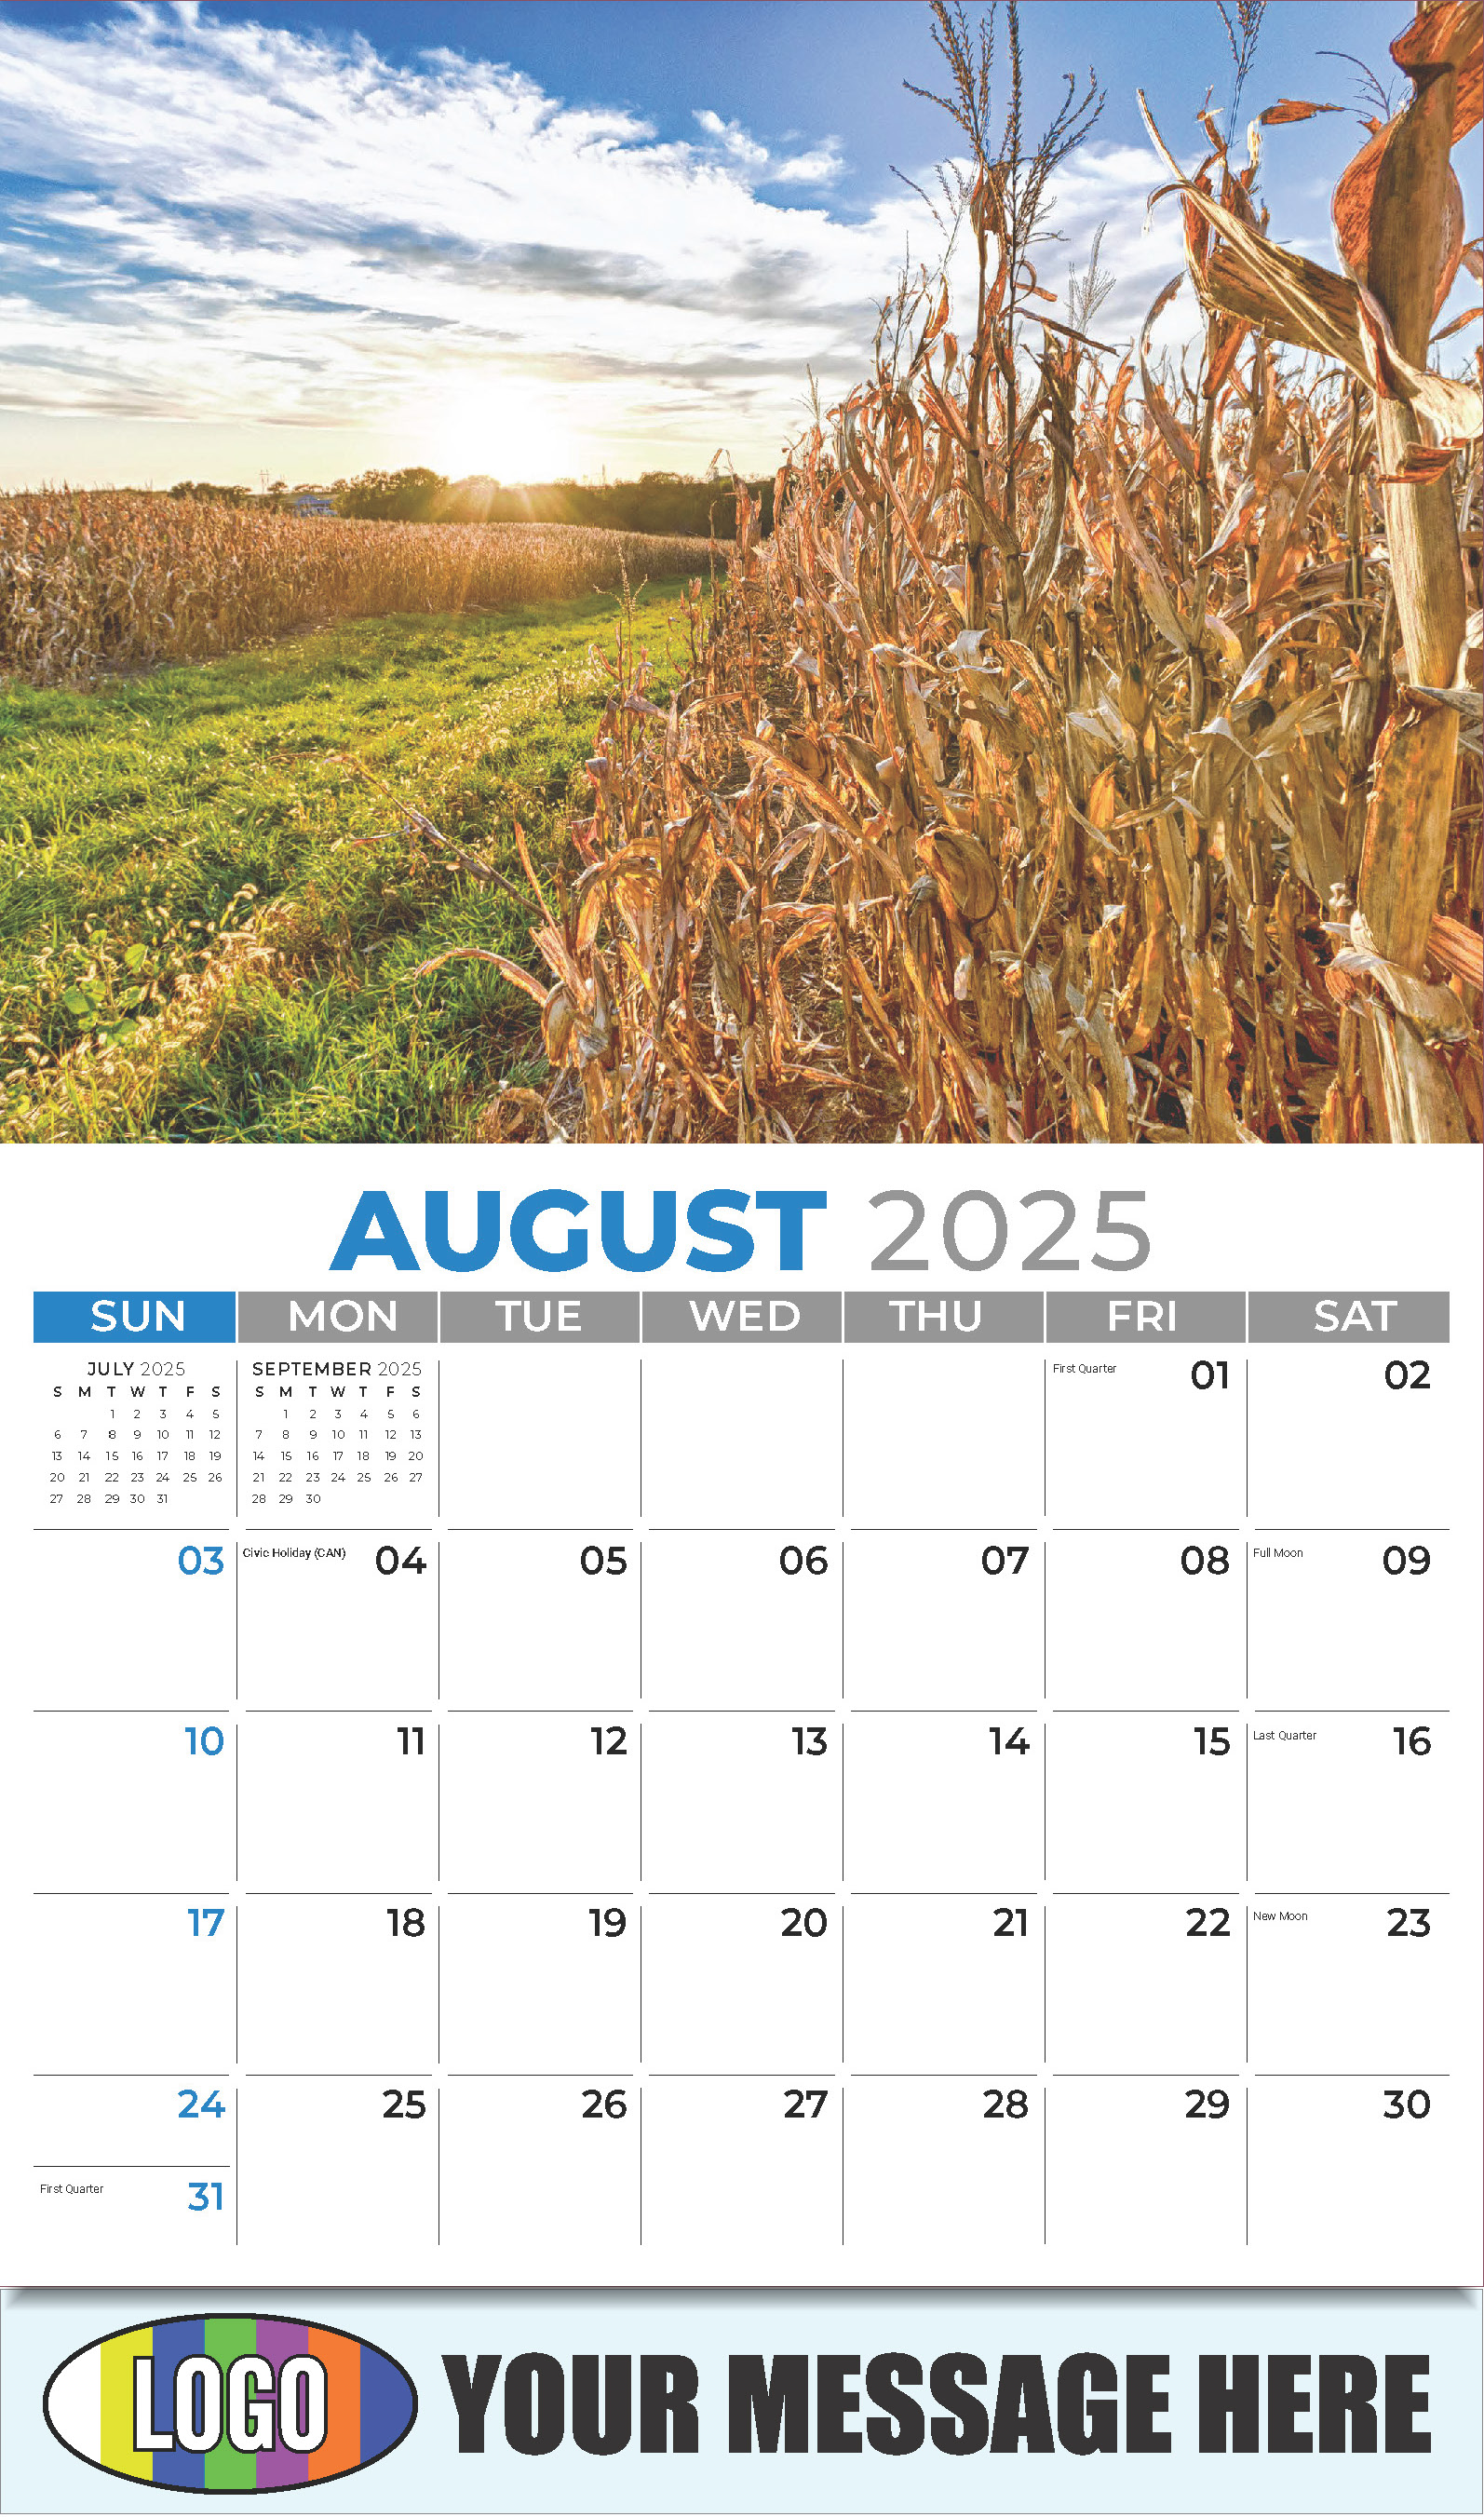 Country Spirit 2025 Business Advertising Calendar - August